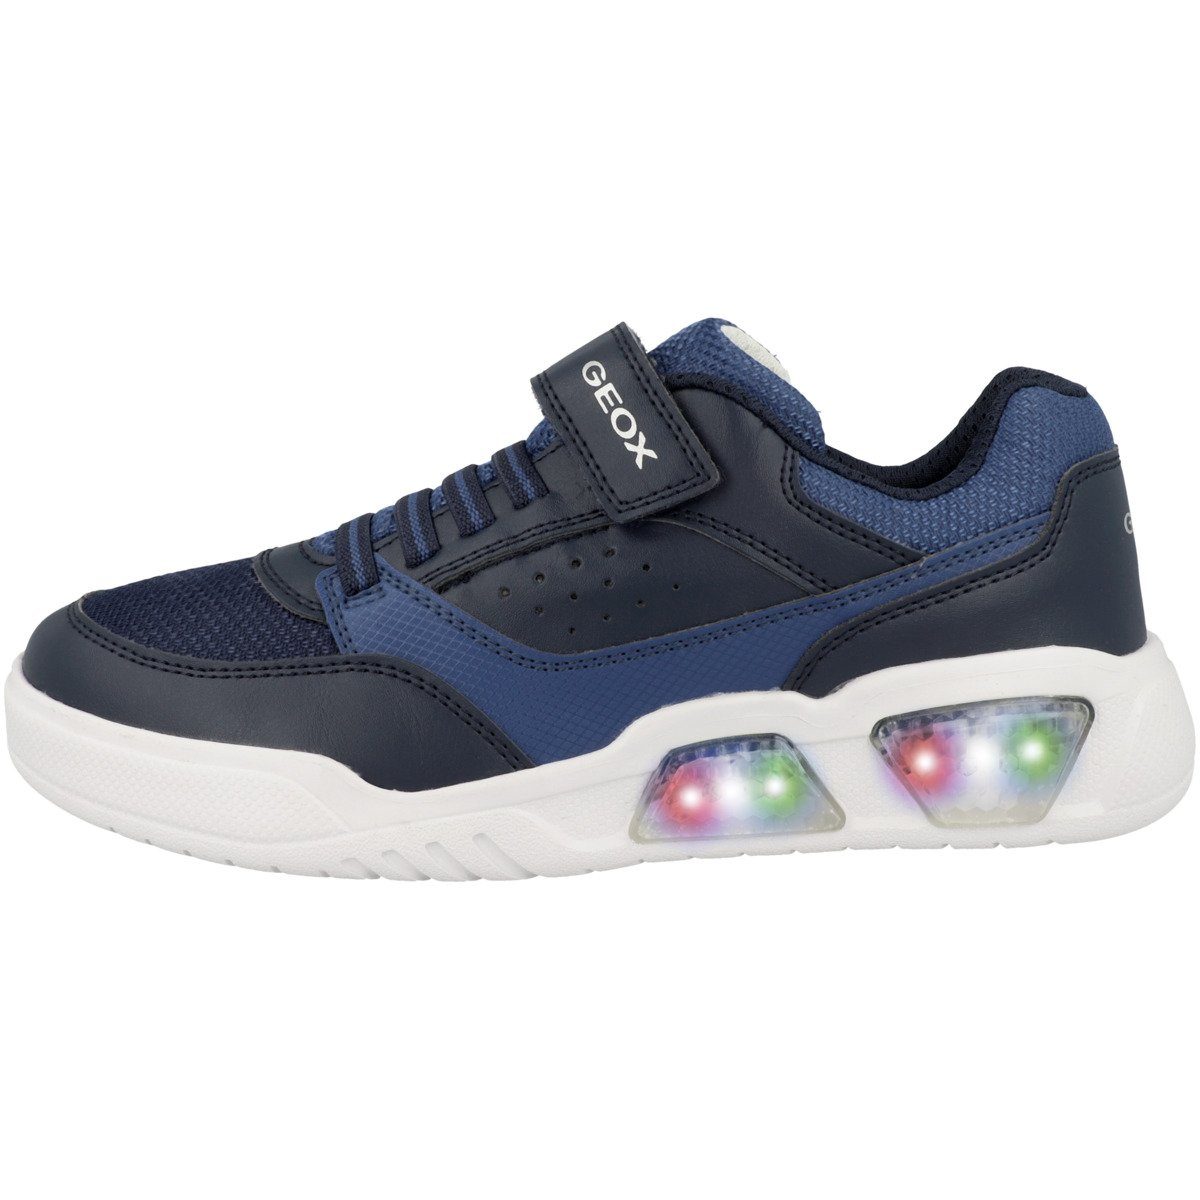 Funktion Illuminus Jungen Geox B. Sneaker LED J dunkelblau B